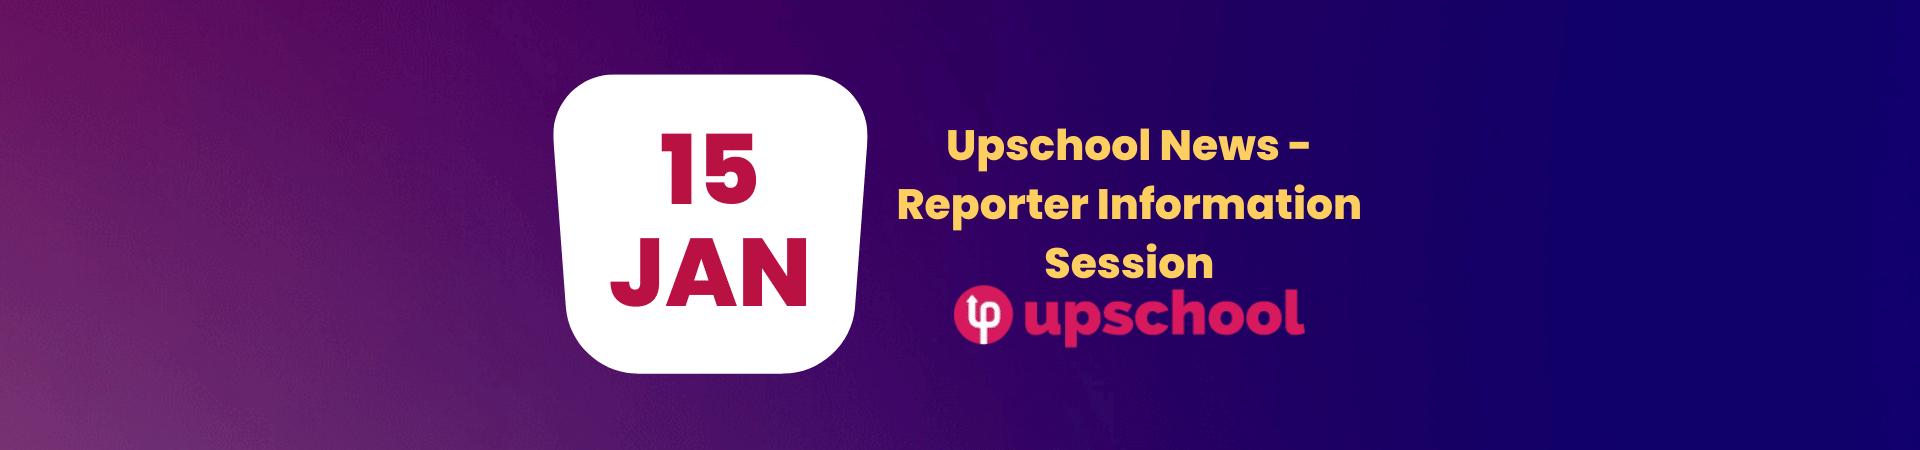 Upschool News – Reporter Information Session